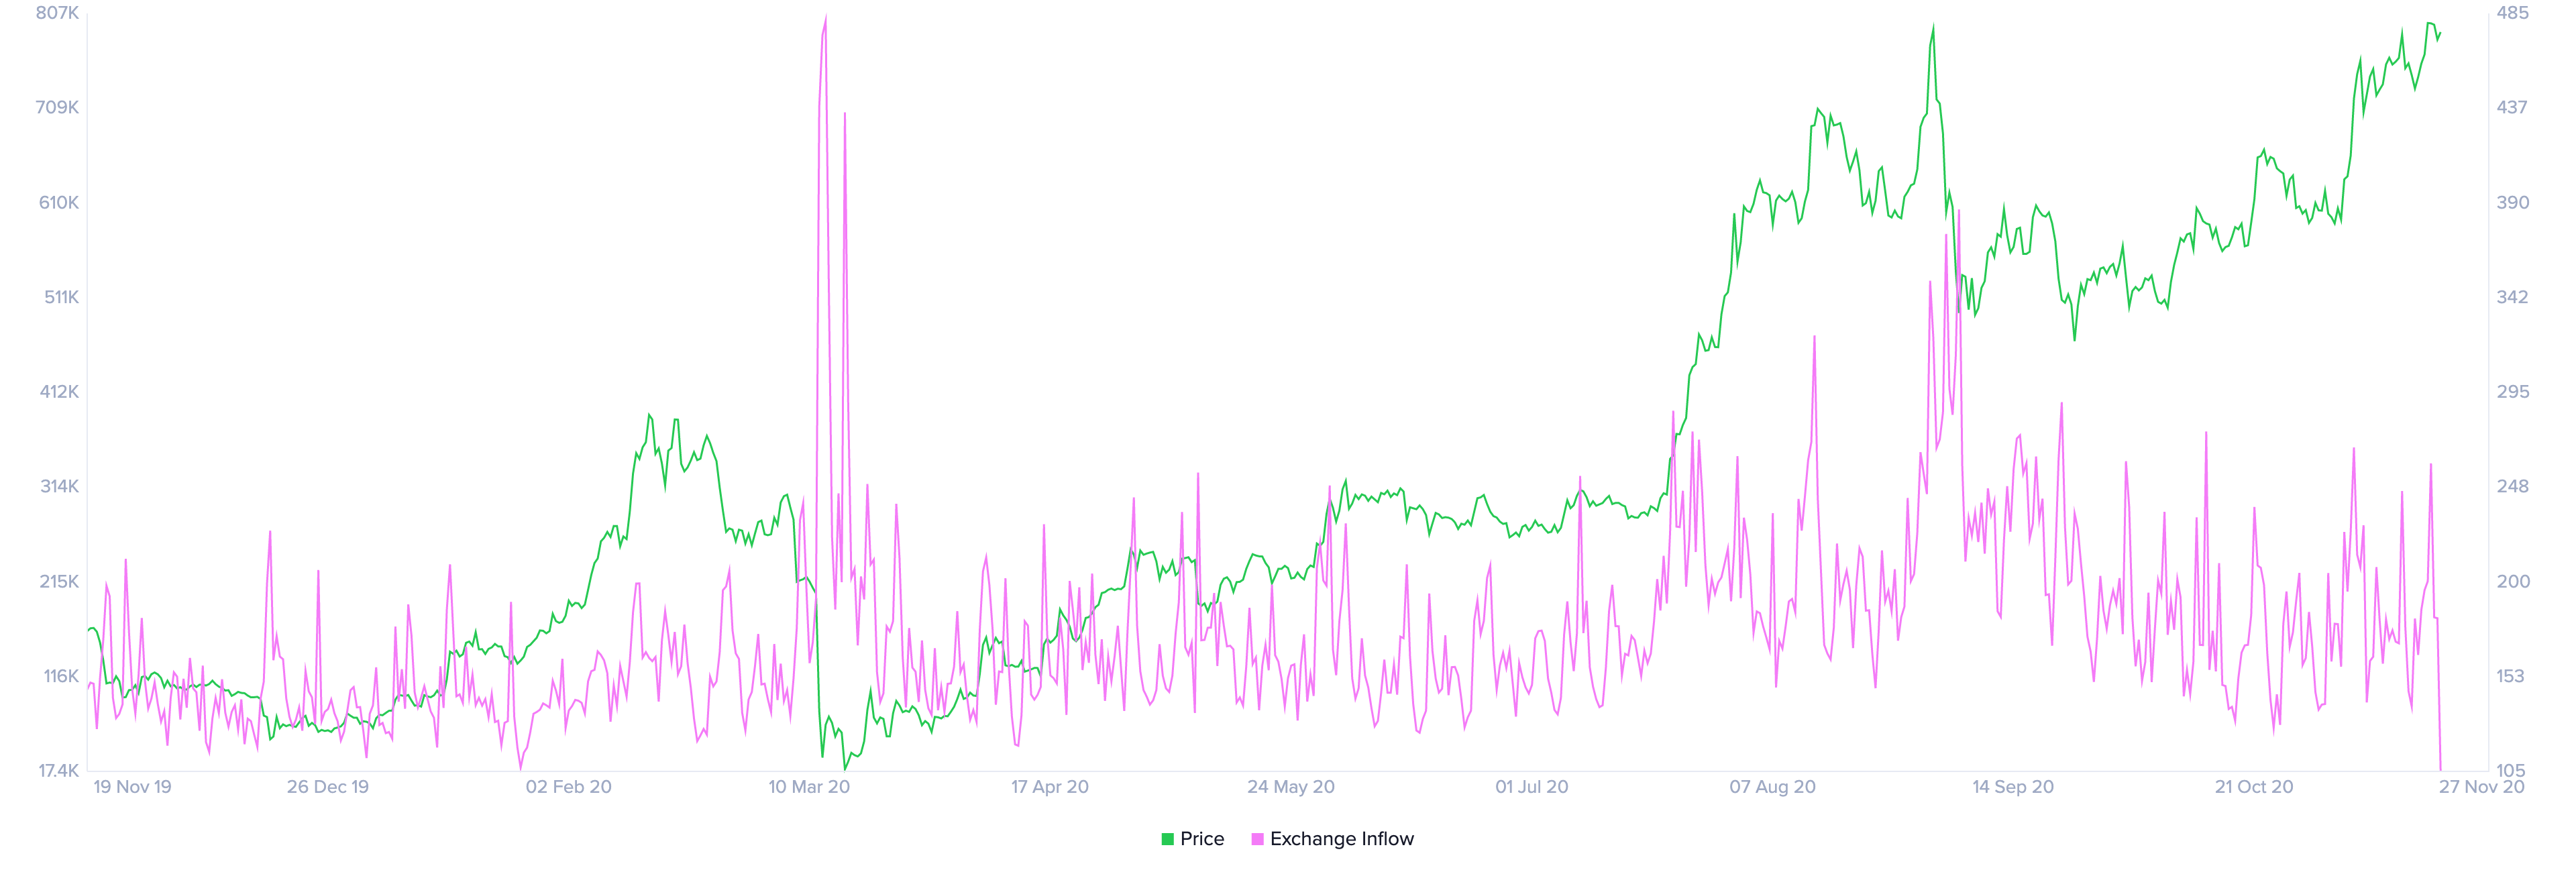 Ethereum's exchange inflows